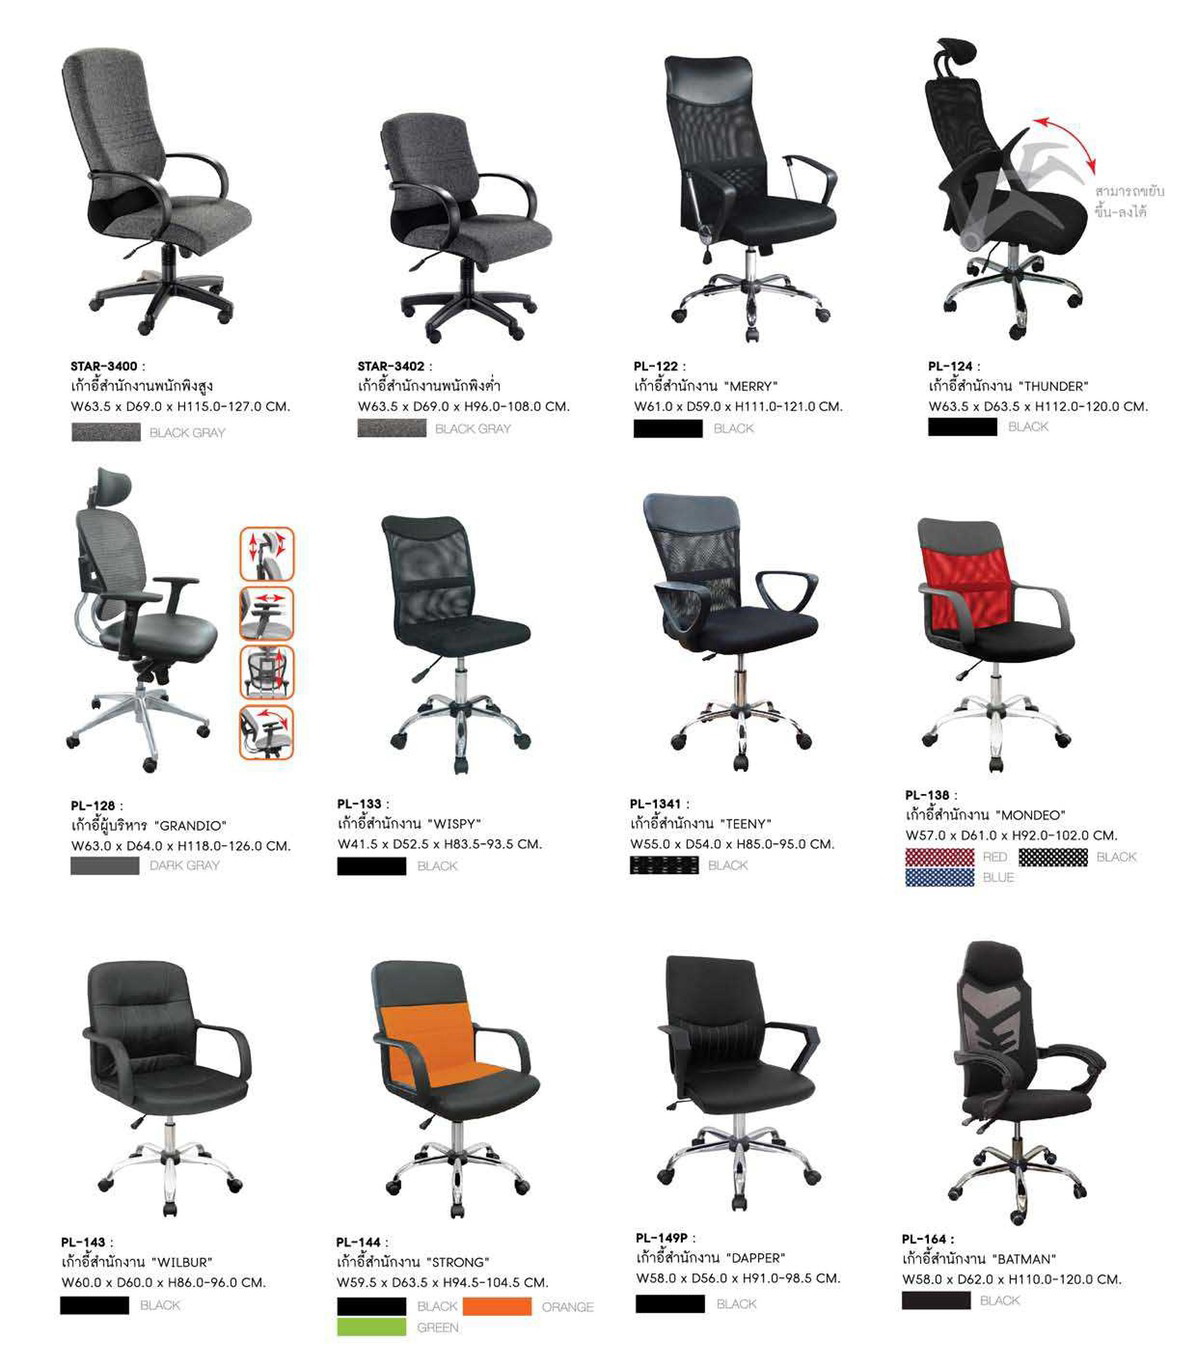 95039::PL-133::เก้าอี้สำนักงาน WISPY ขนาด W 410.50 X D 520.50 X H. 830.50-930.50 MM. เก้าอี้หุ้มด้วยผ้าตาข่ายสีดำ (MESH) บริเวณหัวพนักพิงหุ้มด้วยพนัง PVC 









































